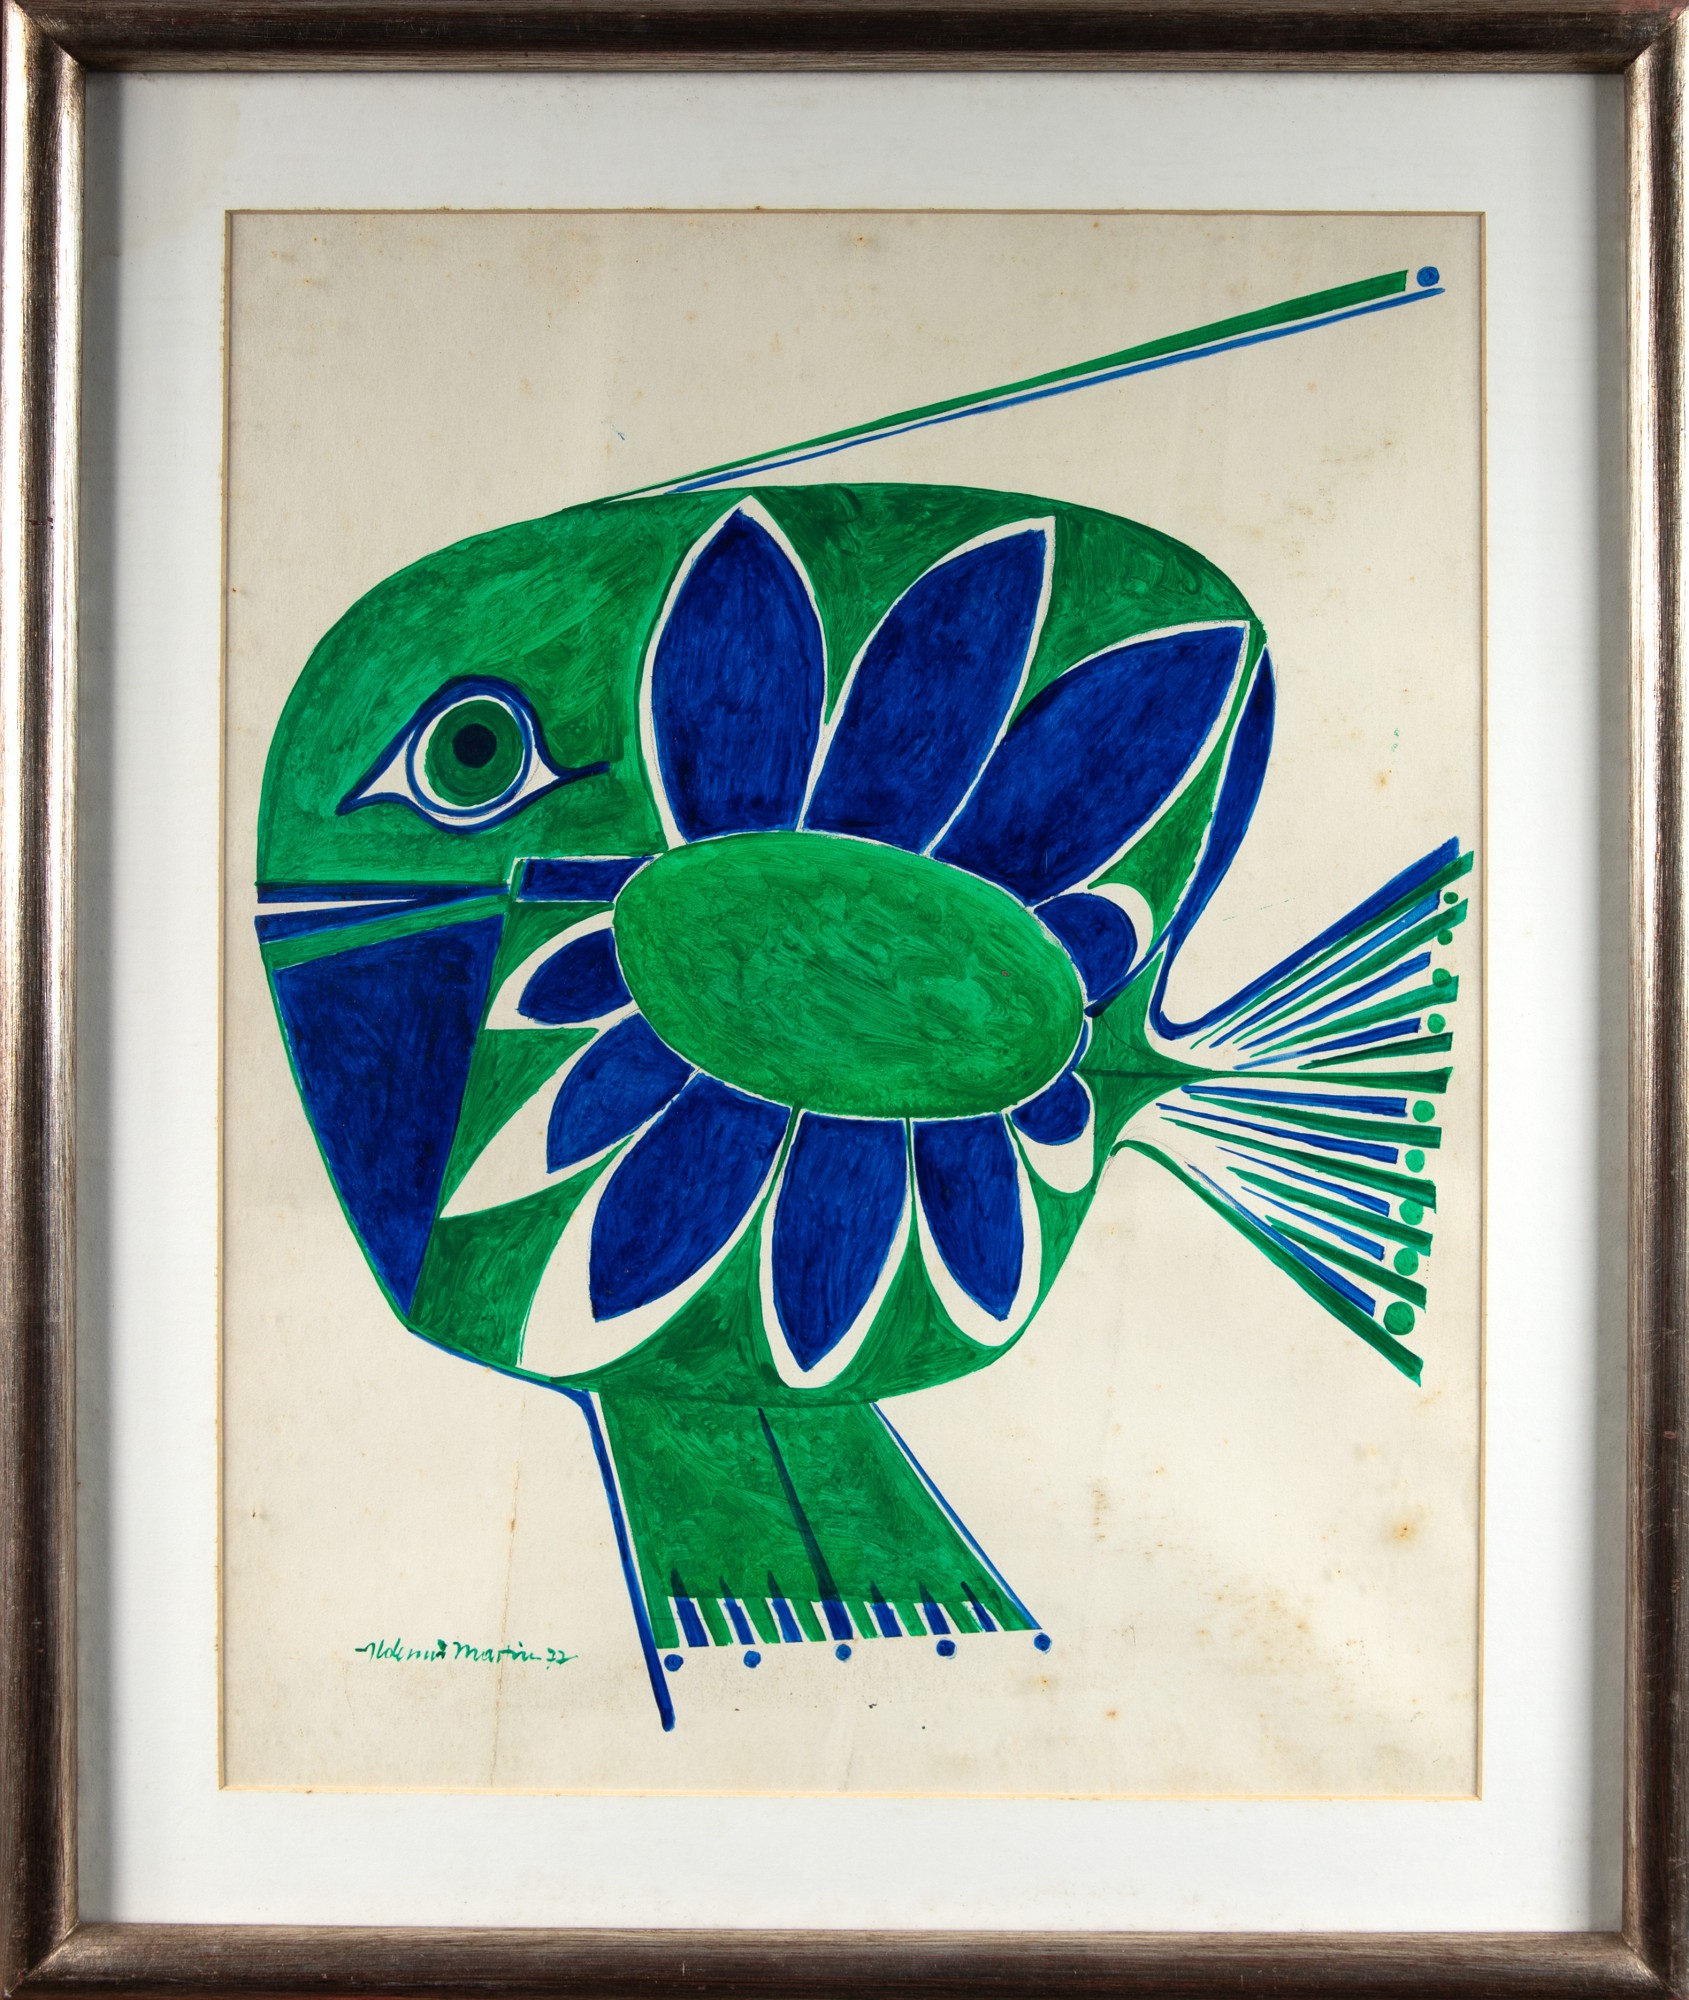 Aldemir Martins - Peixe Verde e Azul